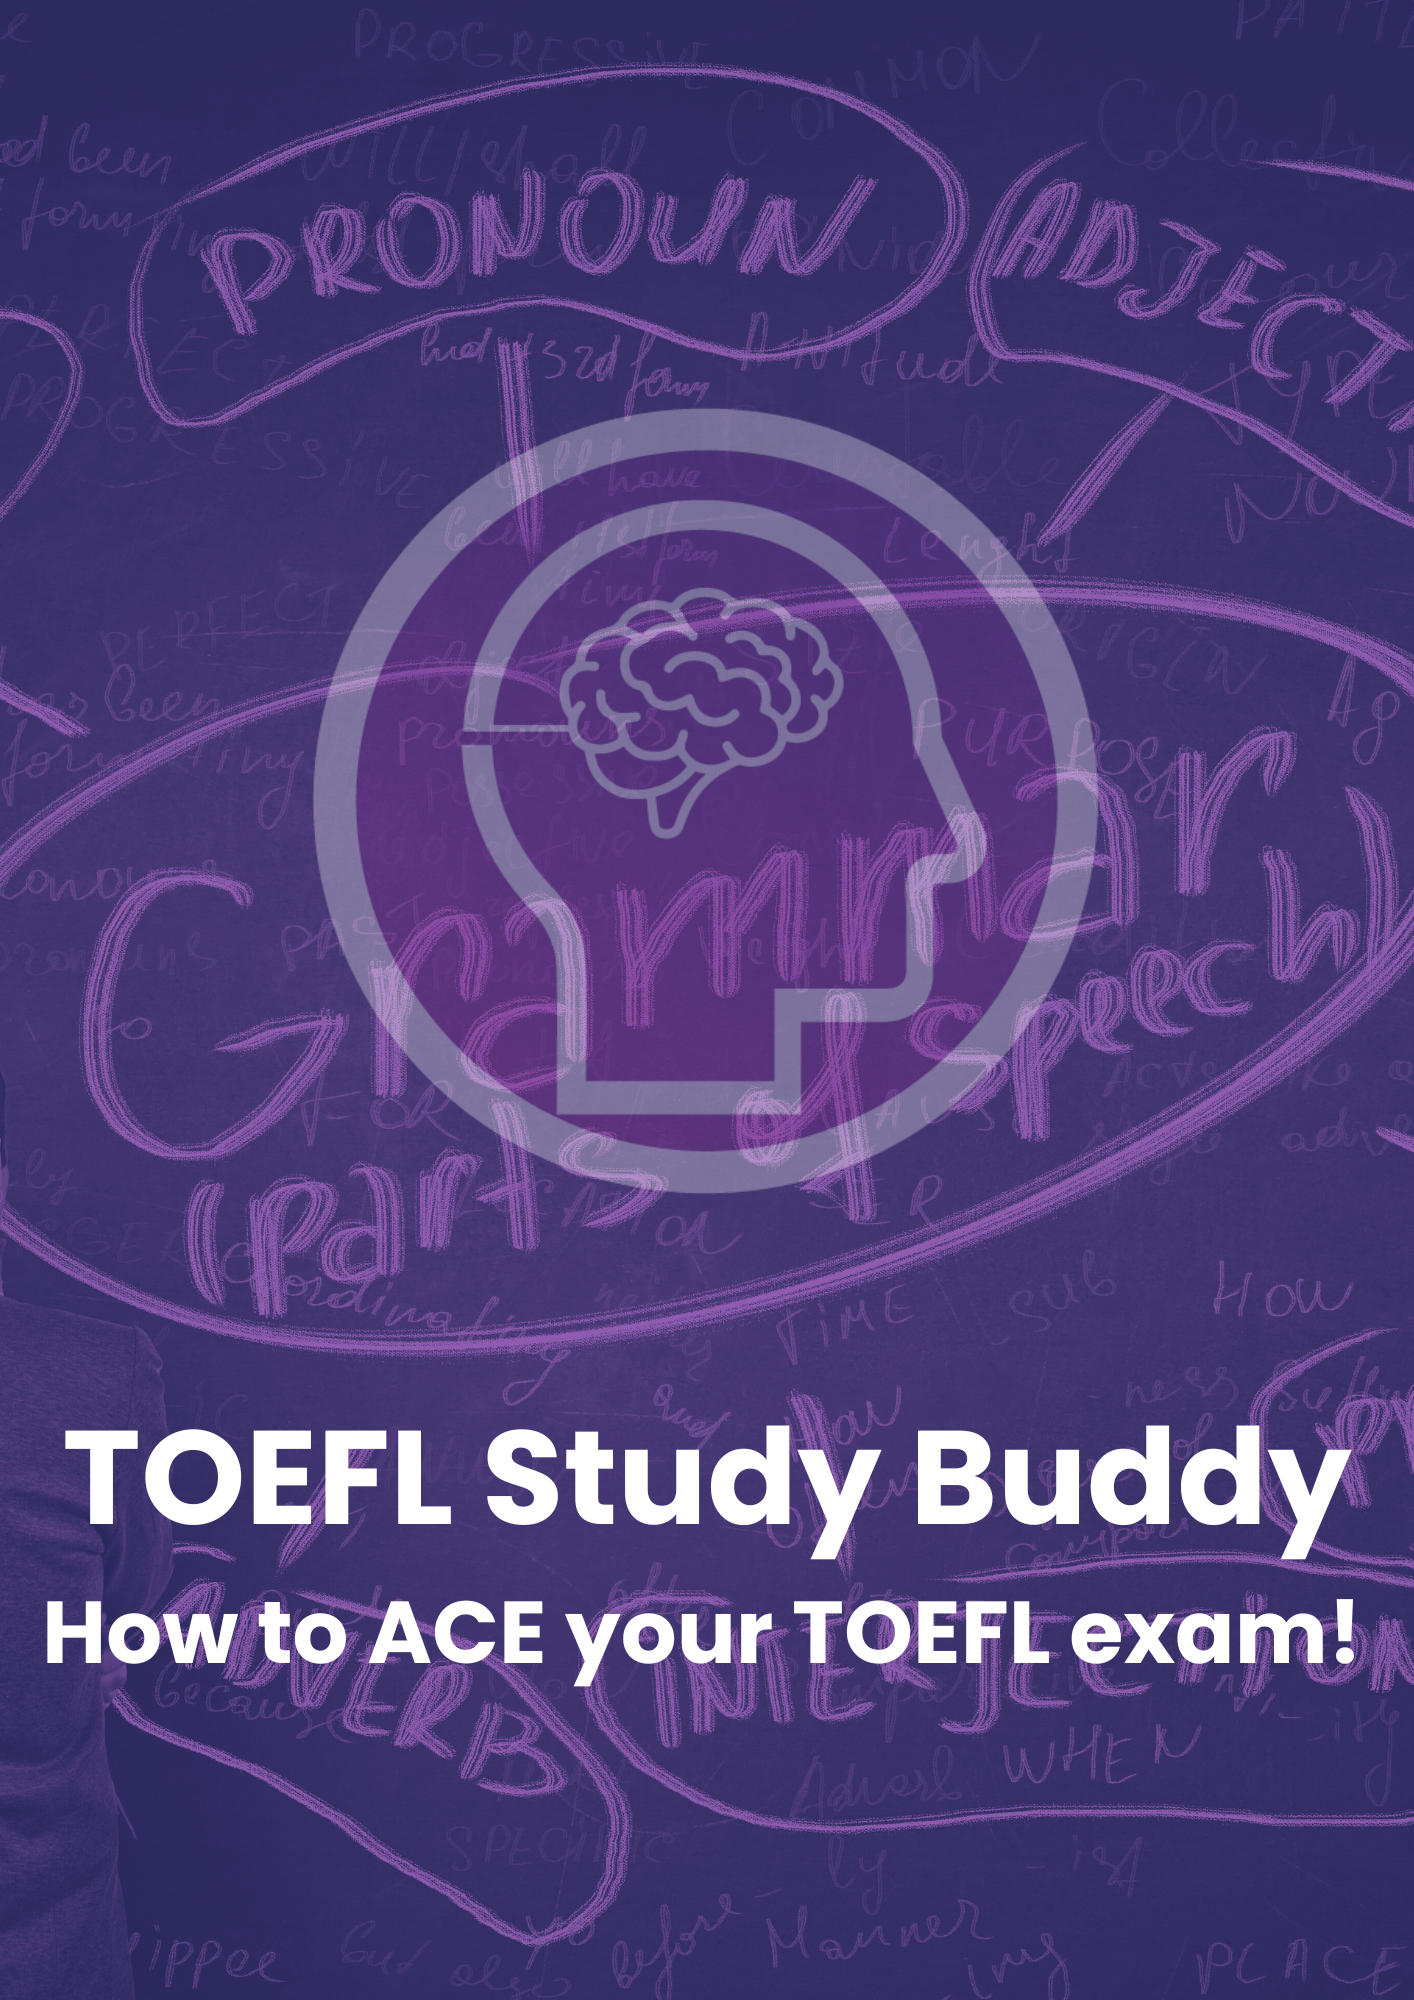 TOEFL study buddy